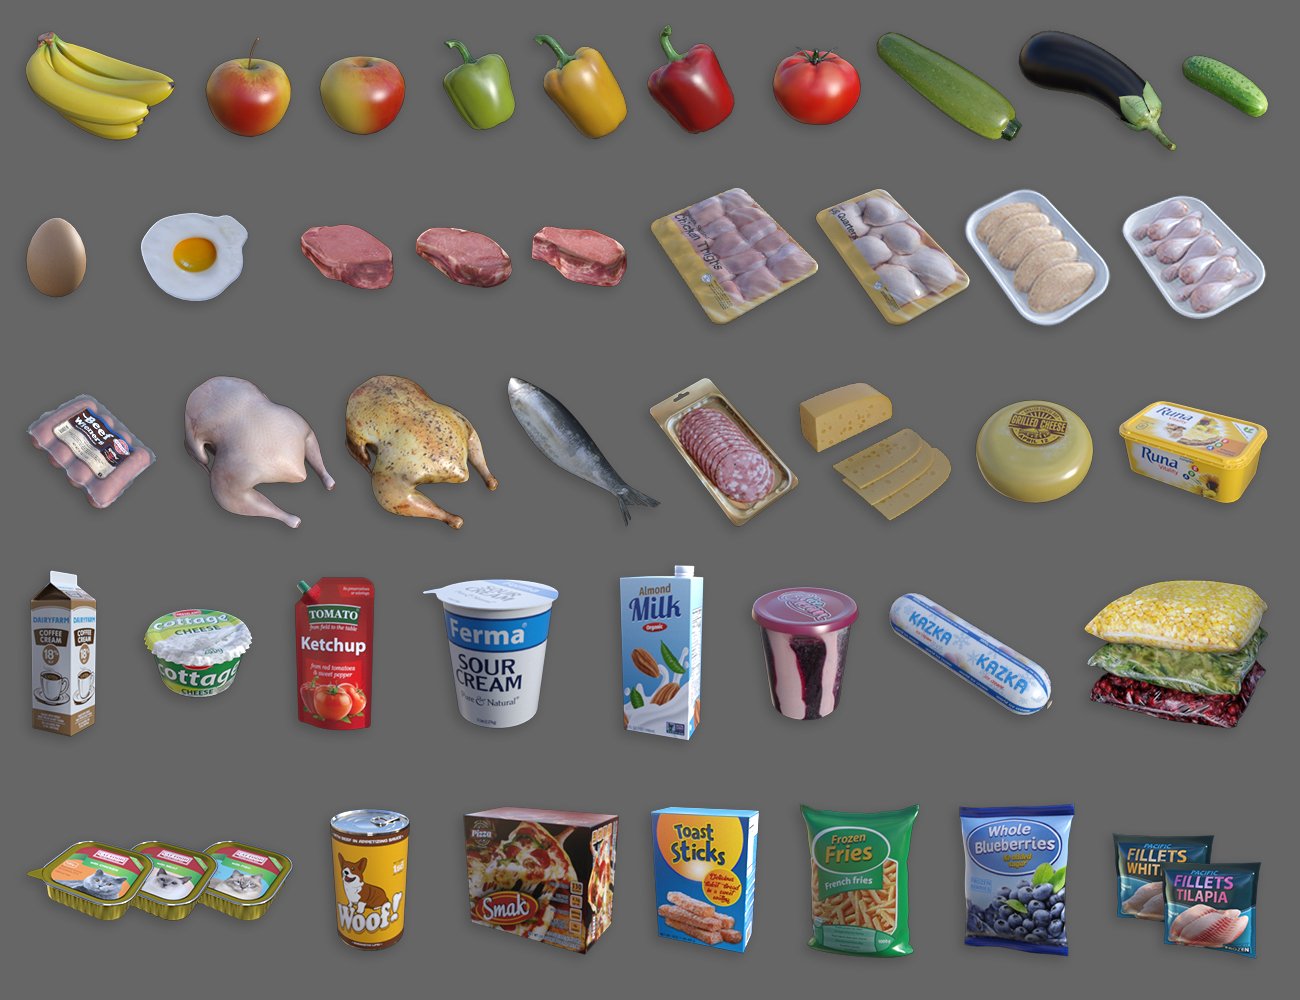 Modern House 2 Kitchen Food by: petipet, 3D Models by Daz 3D